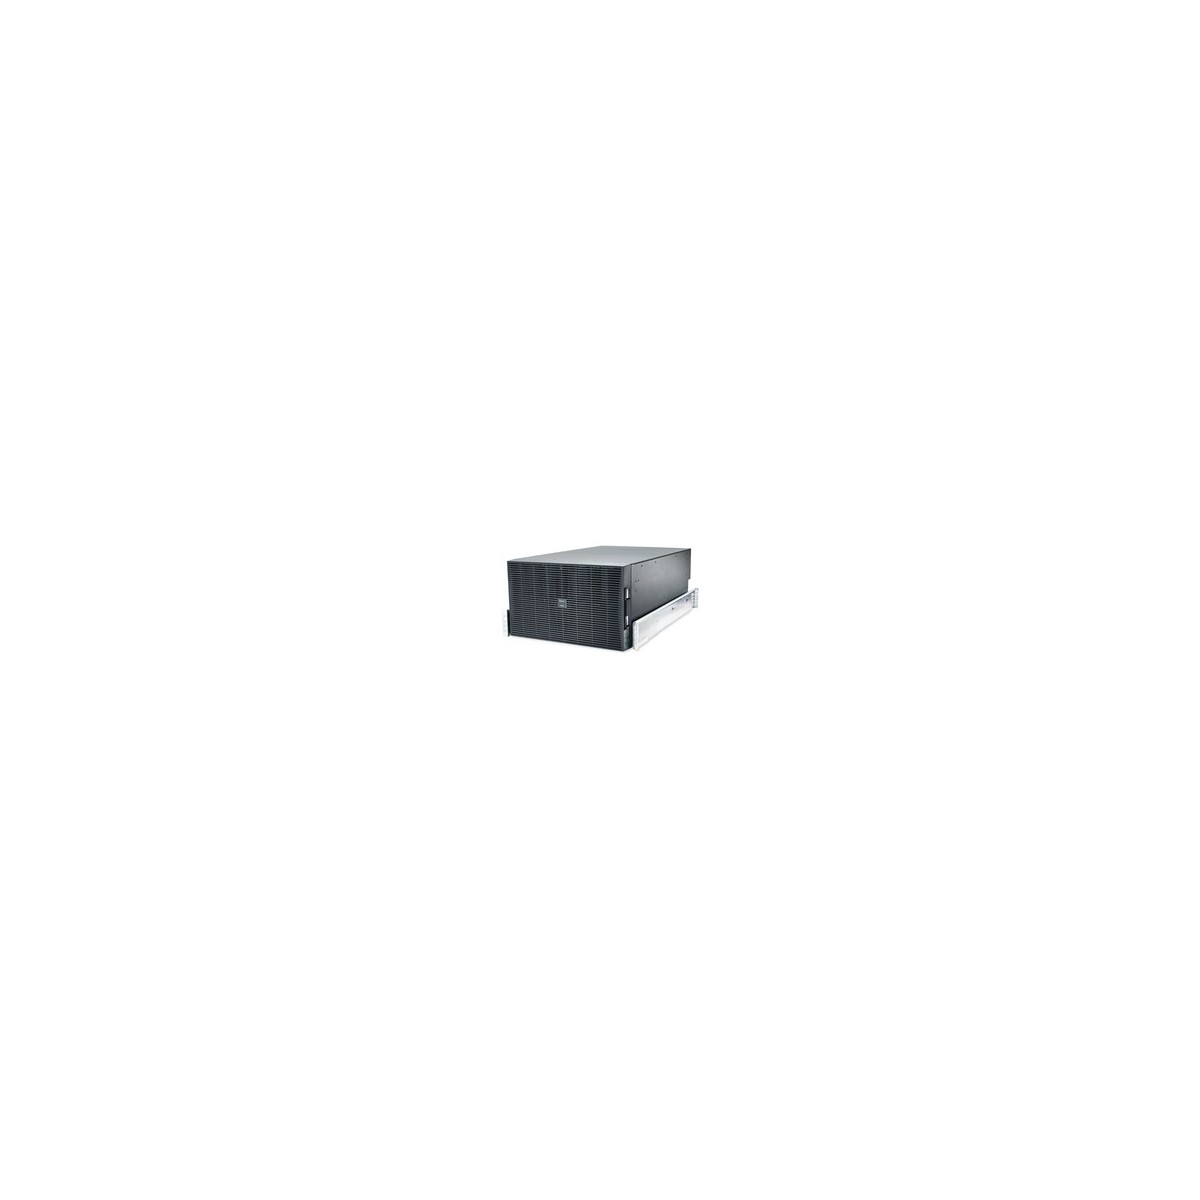 APC Smart-UPS InfraStruXure Type A One Rack RT 2000VA Basic System - (Offline) UPS 2,000 W Rack module - 19 